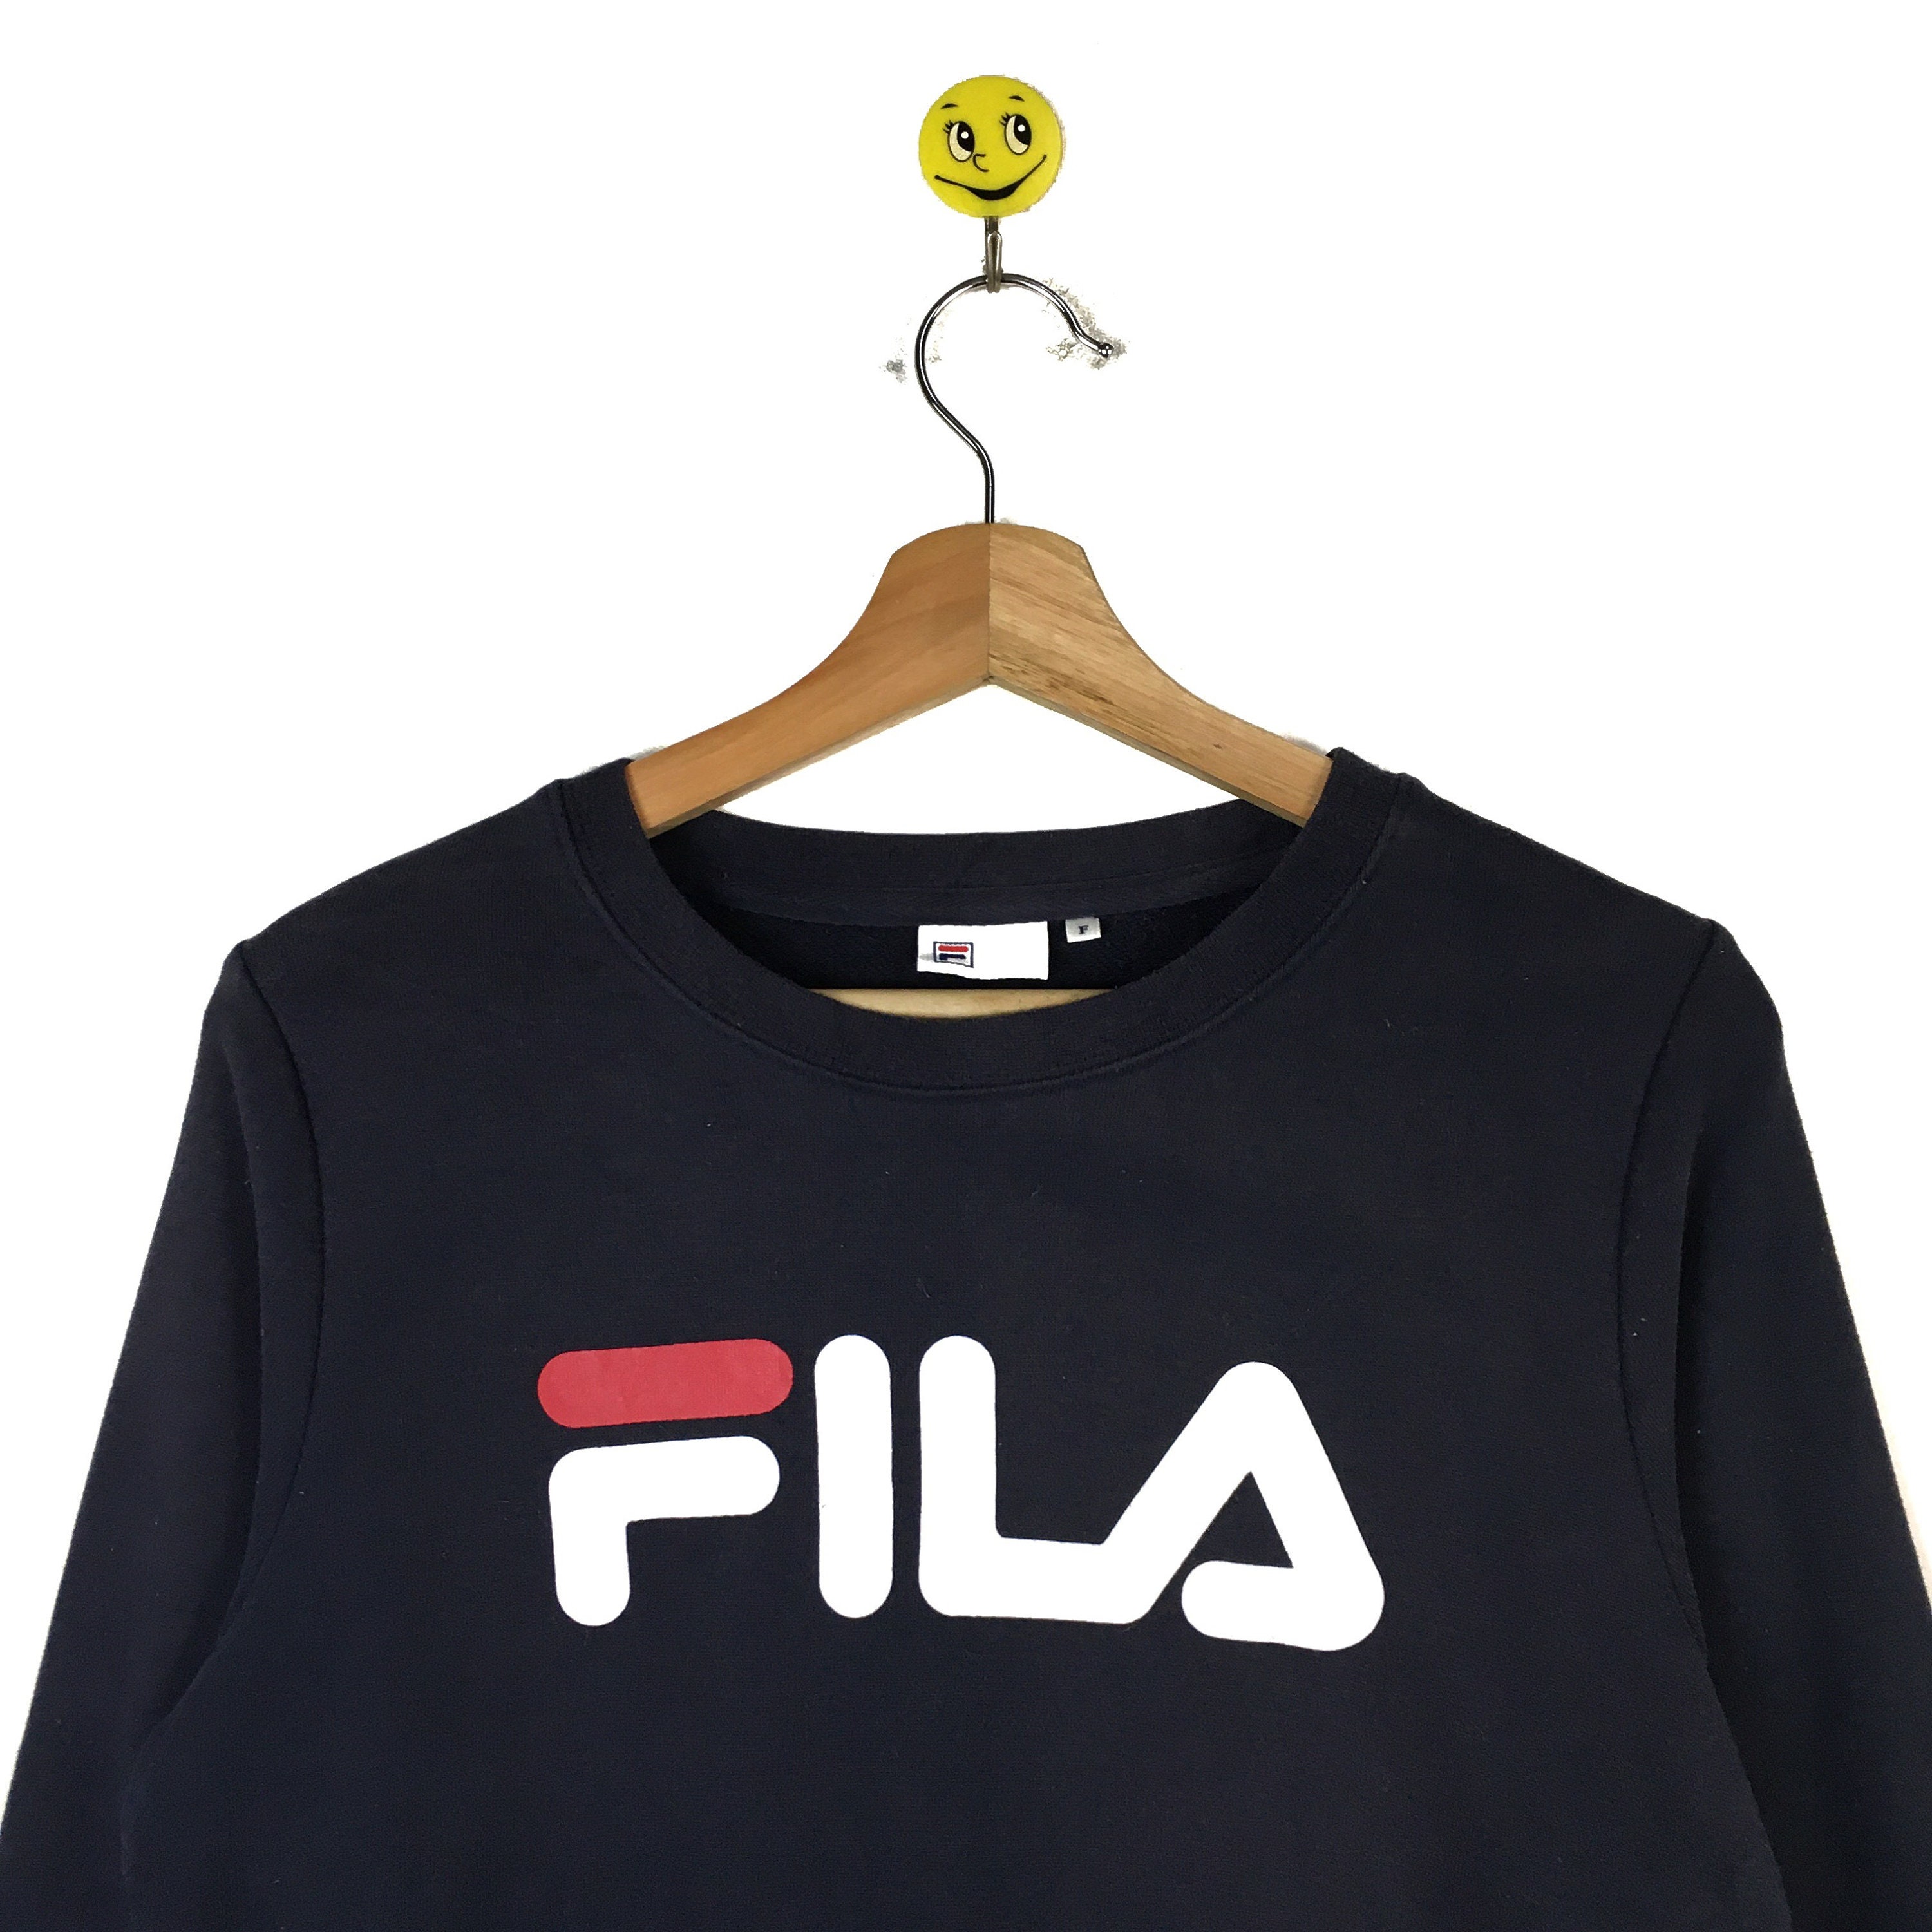 Rare Fila sweatshirt Fila pullover Fila sweater shirt jacket | Etsy